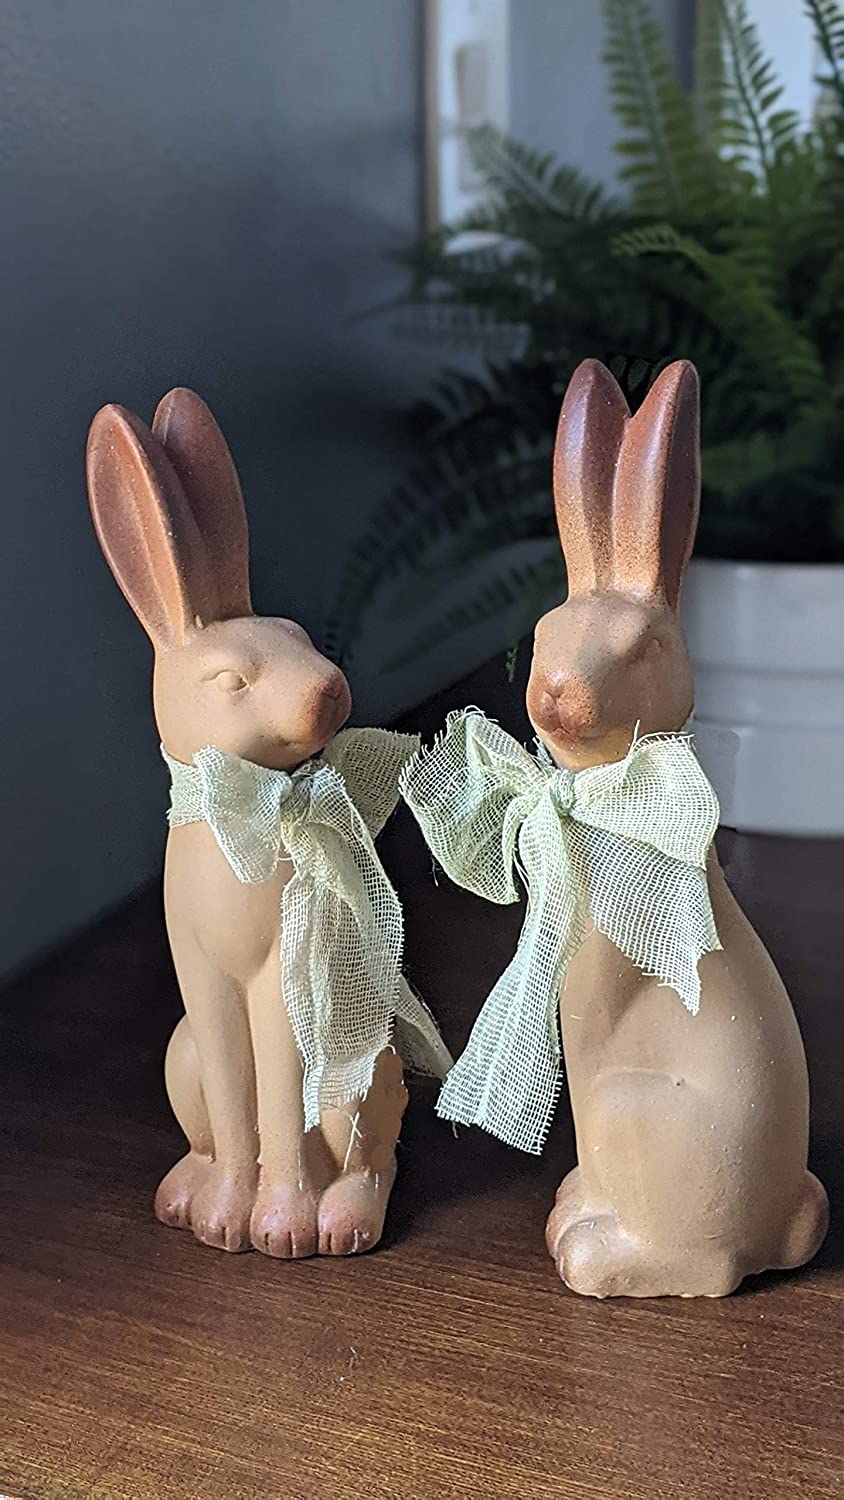 Set of 2 Rustic Terracotta Bunny Rabbit Spring Figurines Tabletop